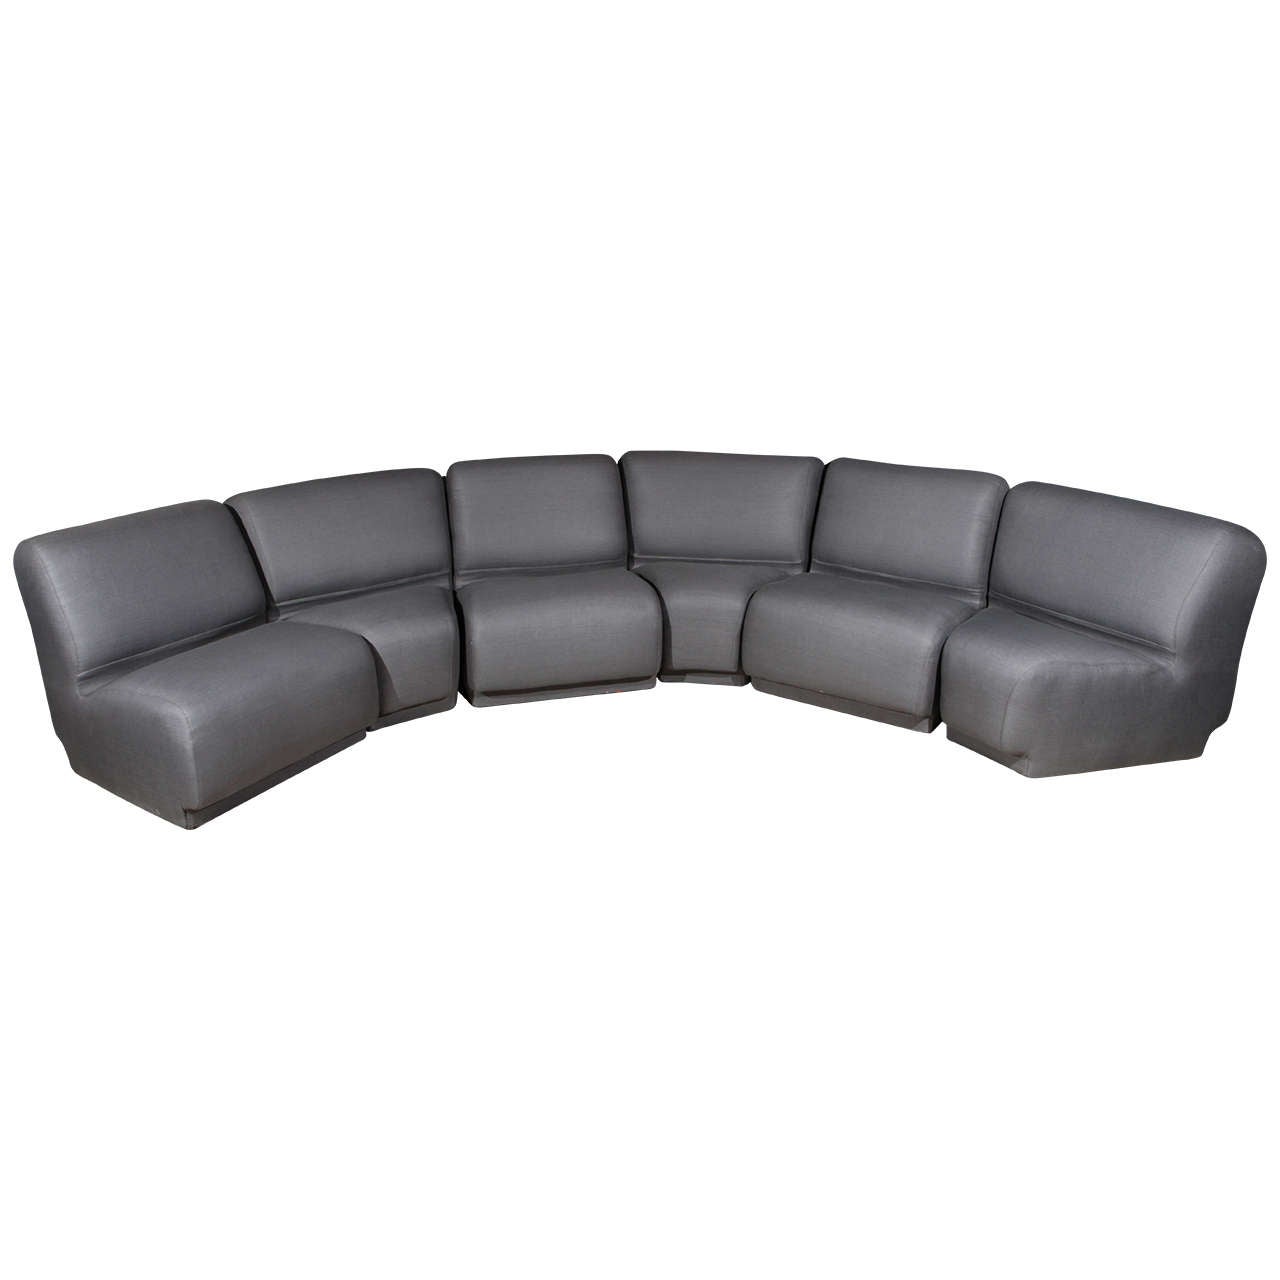 Semi-Circular Modular Sofa by Knoll